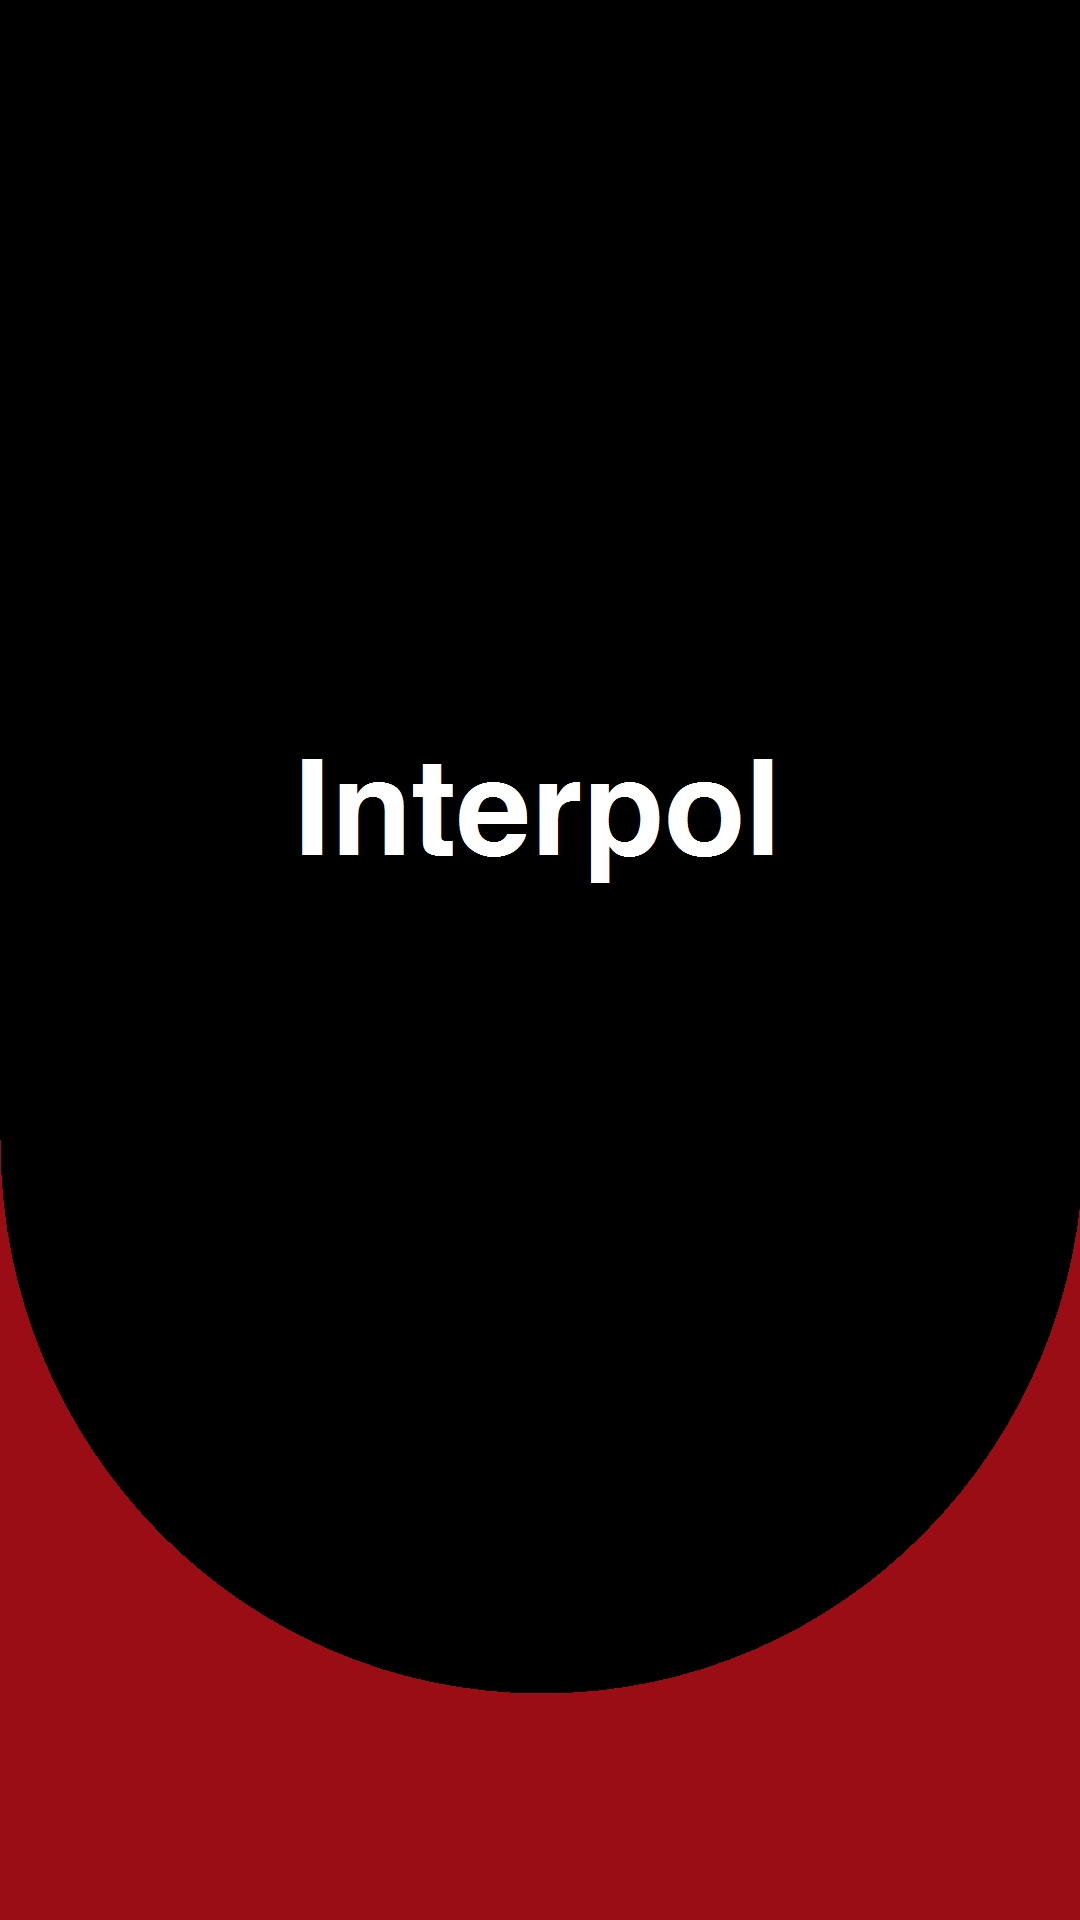 Made An Interpol Lock Screen Wallpaper In Ms Paint